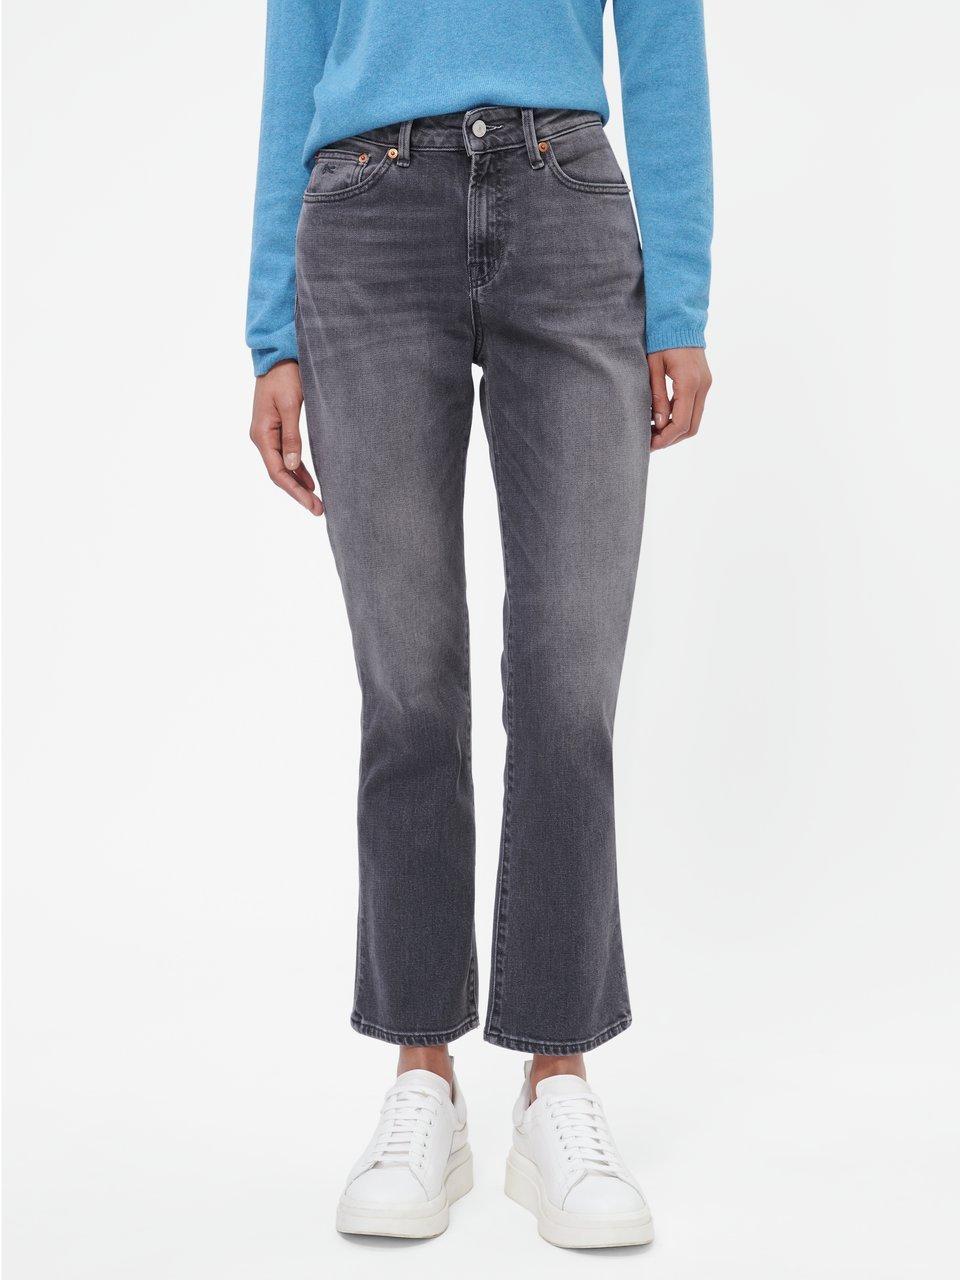 Denham - Jeans Brittany Bootcut